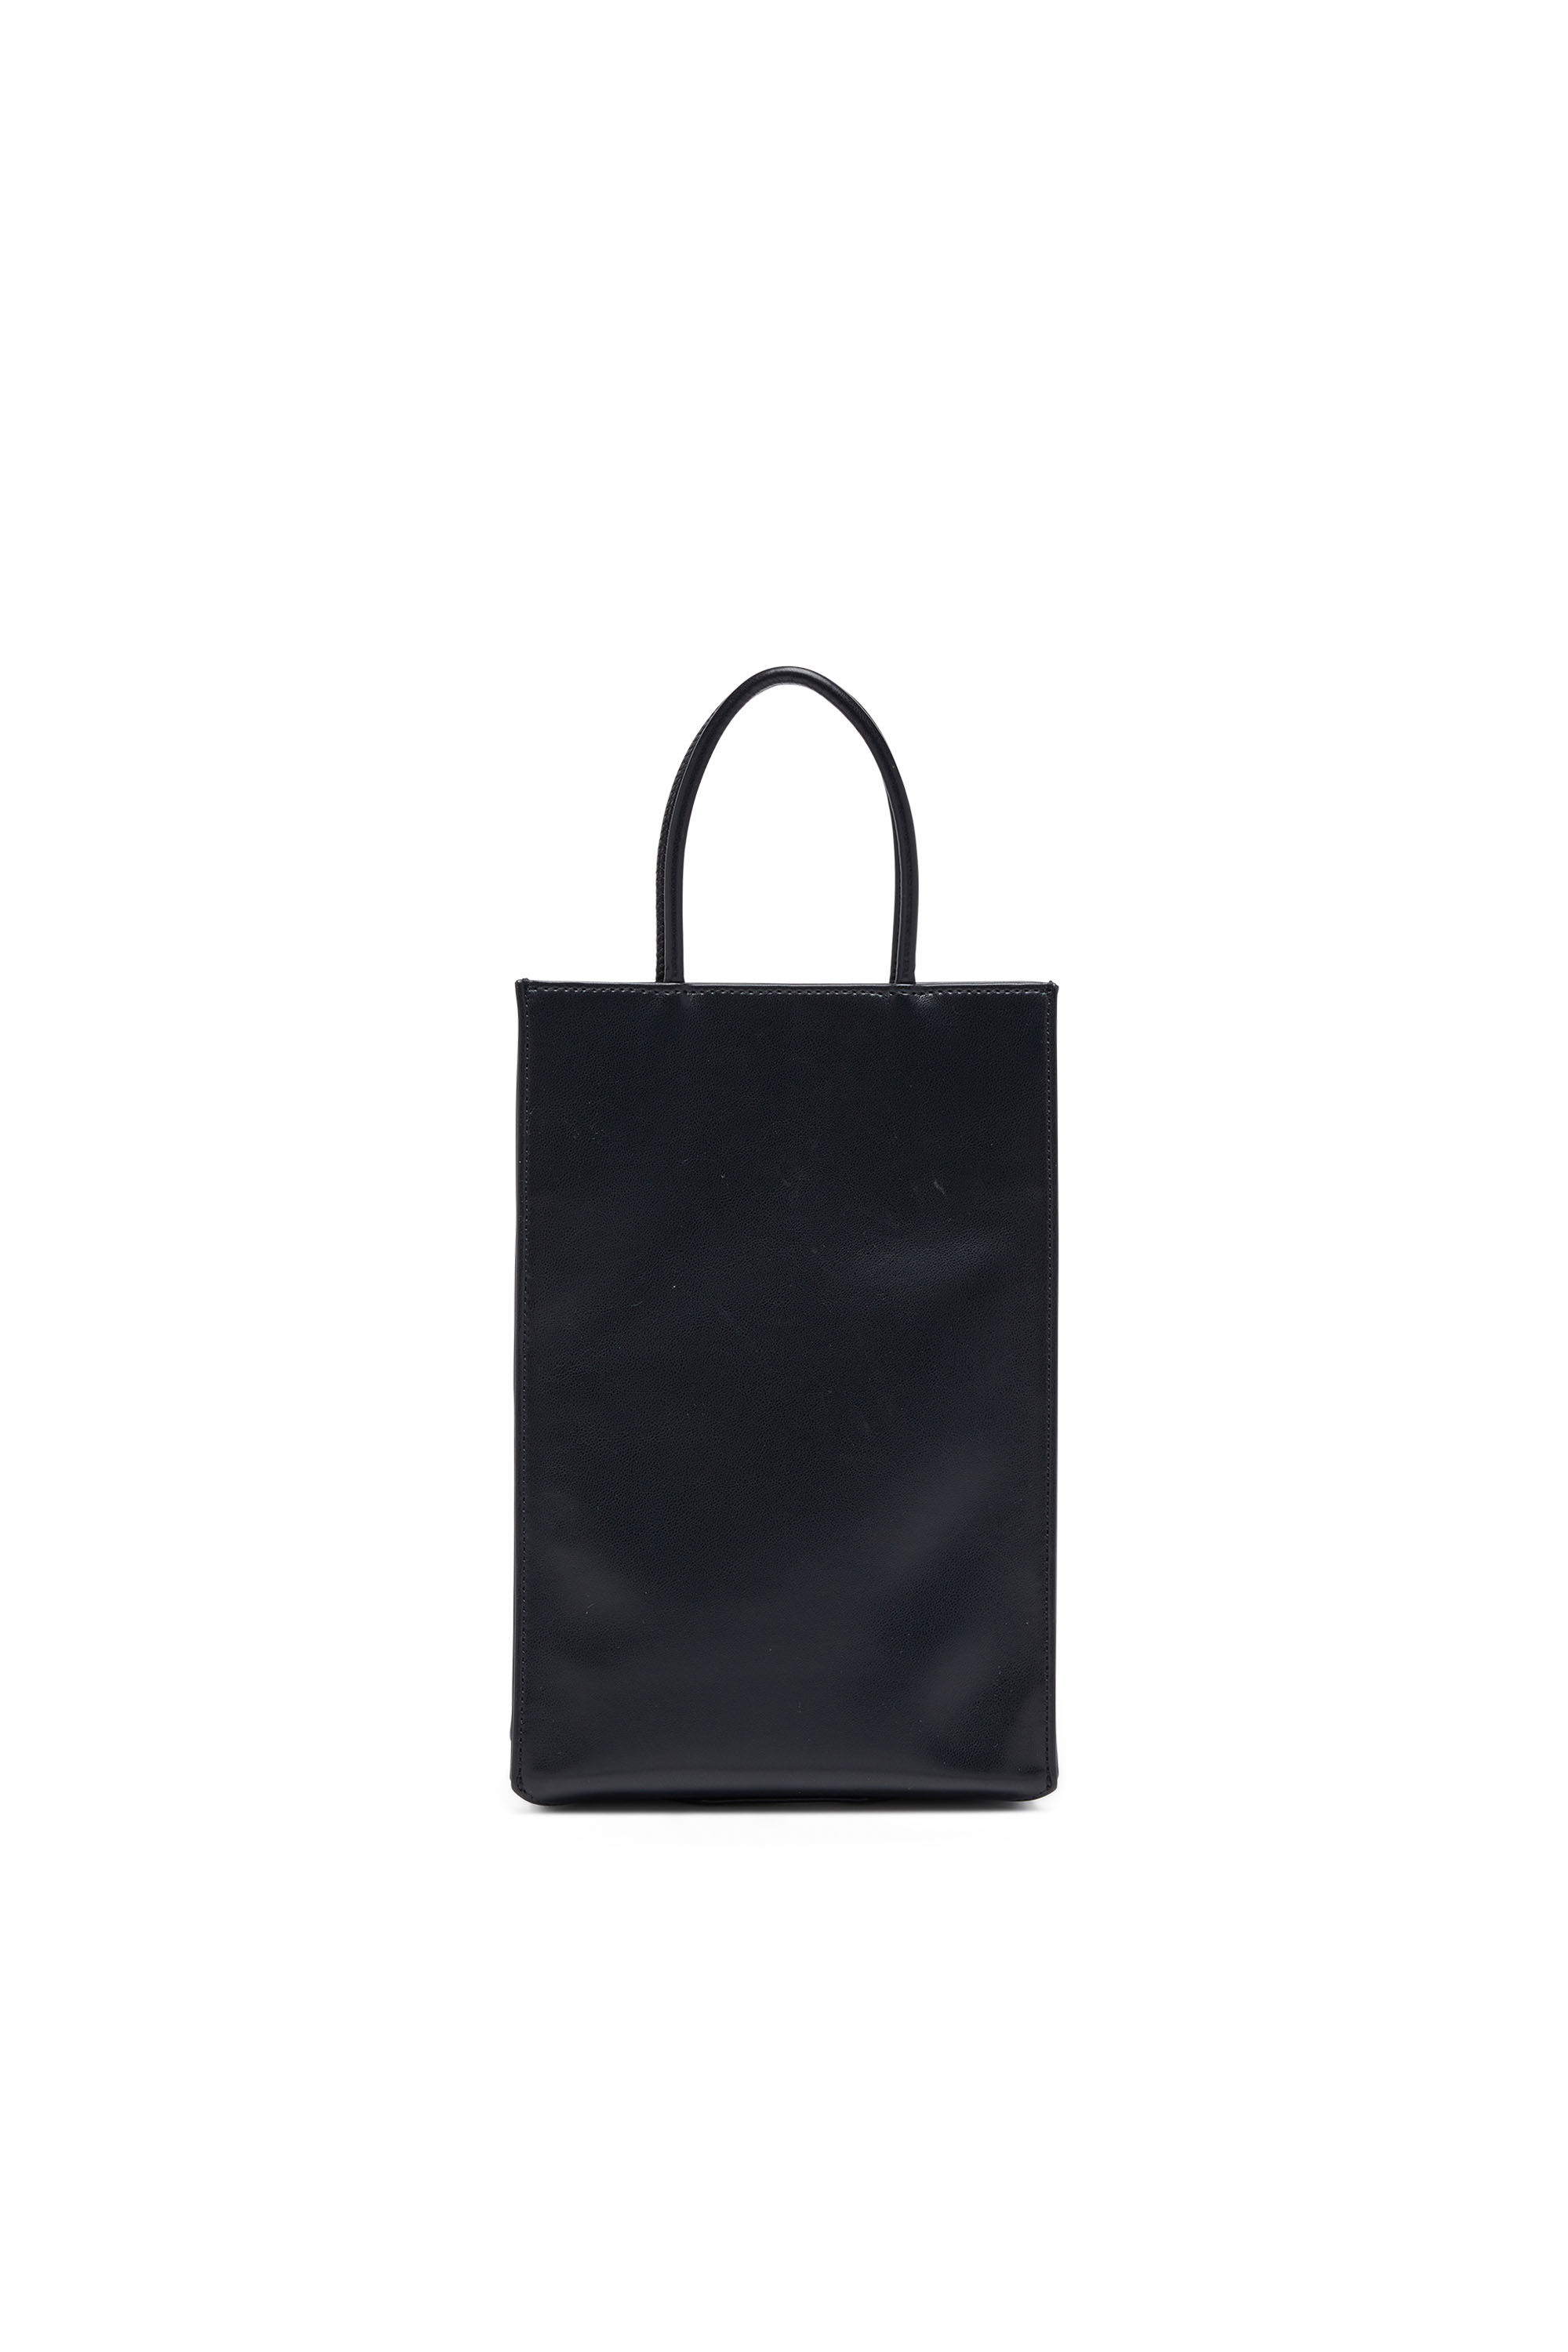 DSL 3D SHOPPER M X Dsl 3D Shopper M X - PU tote bag with embossed 